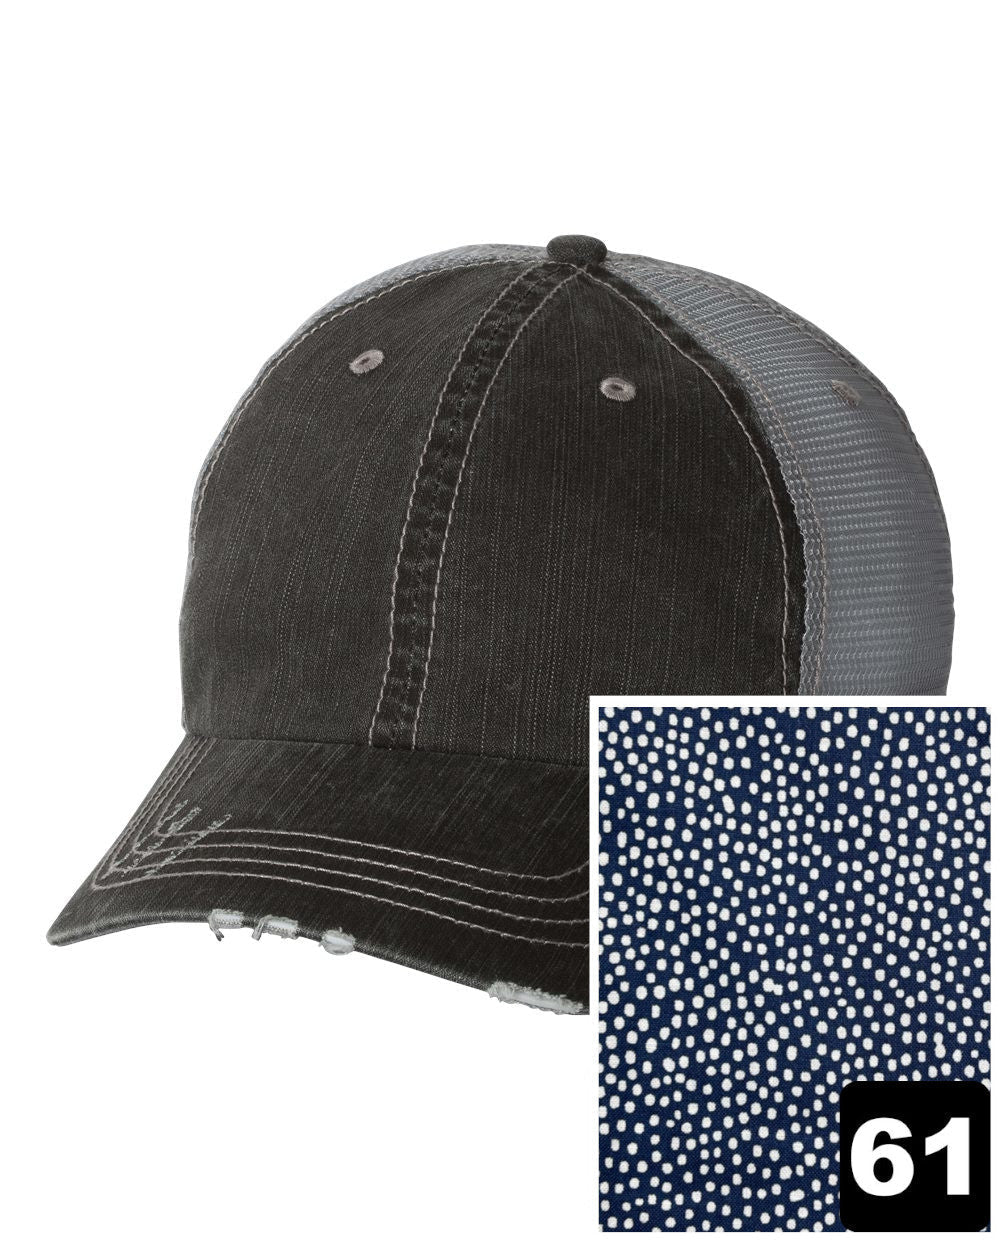 Upper Peninsula Hat | Gray Distressed Trucker Cap | Many Fabric Choices